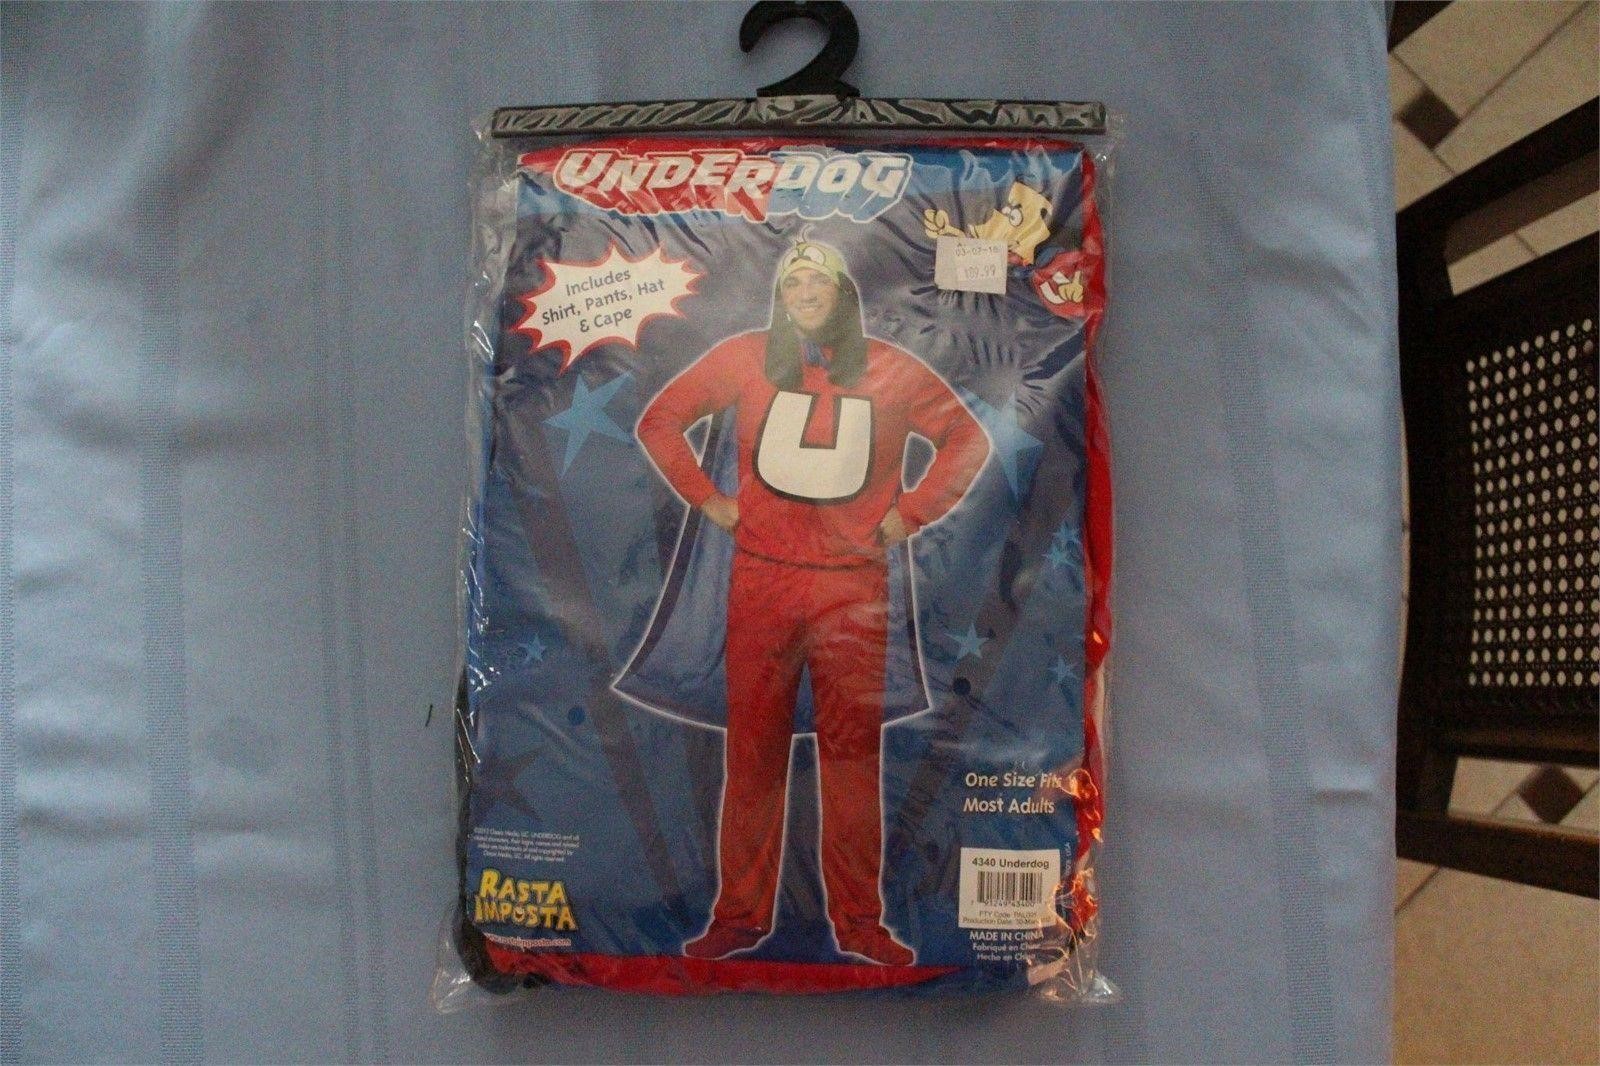 Cosplay Men's Underdog Costume. One Size